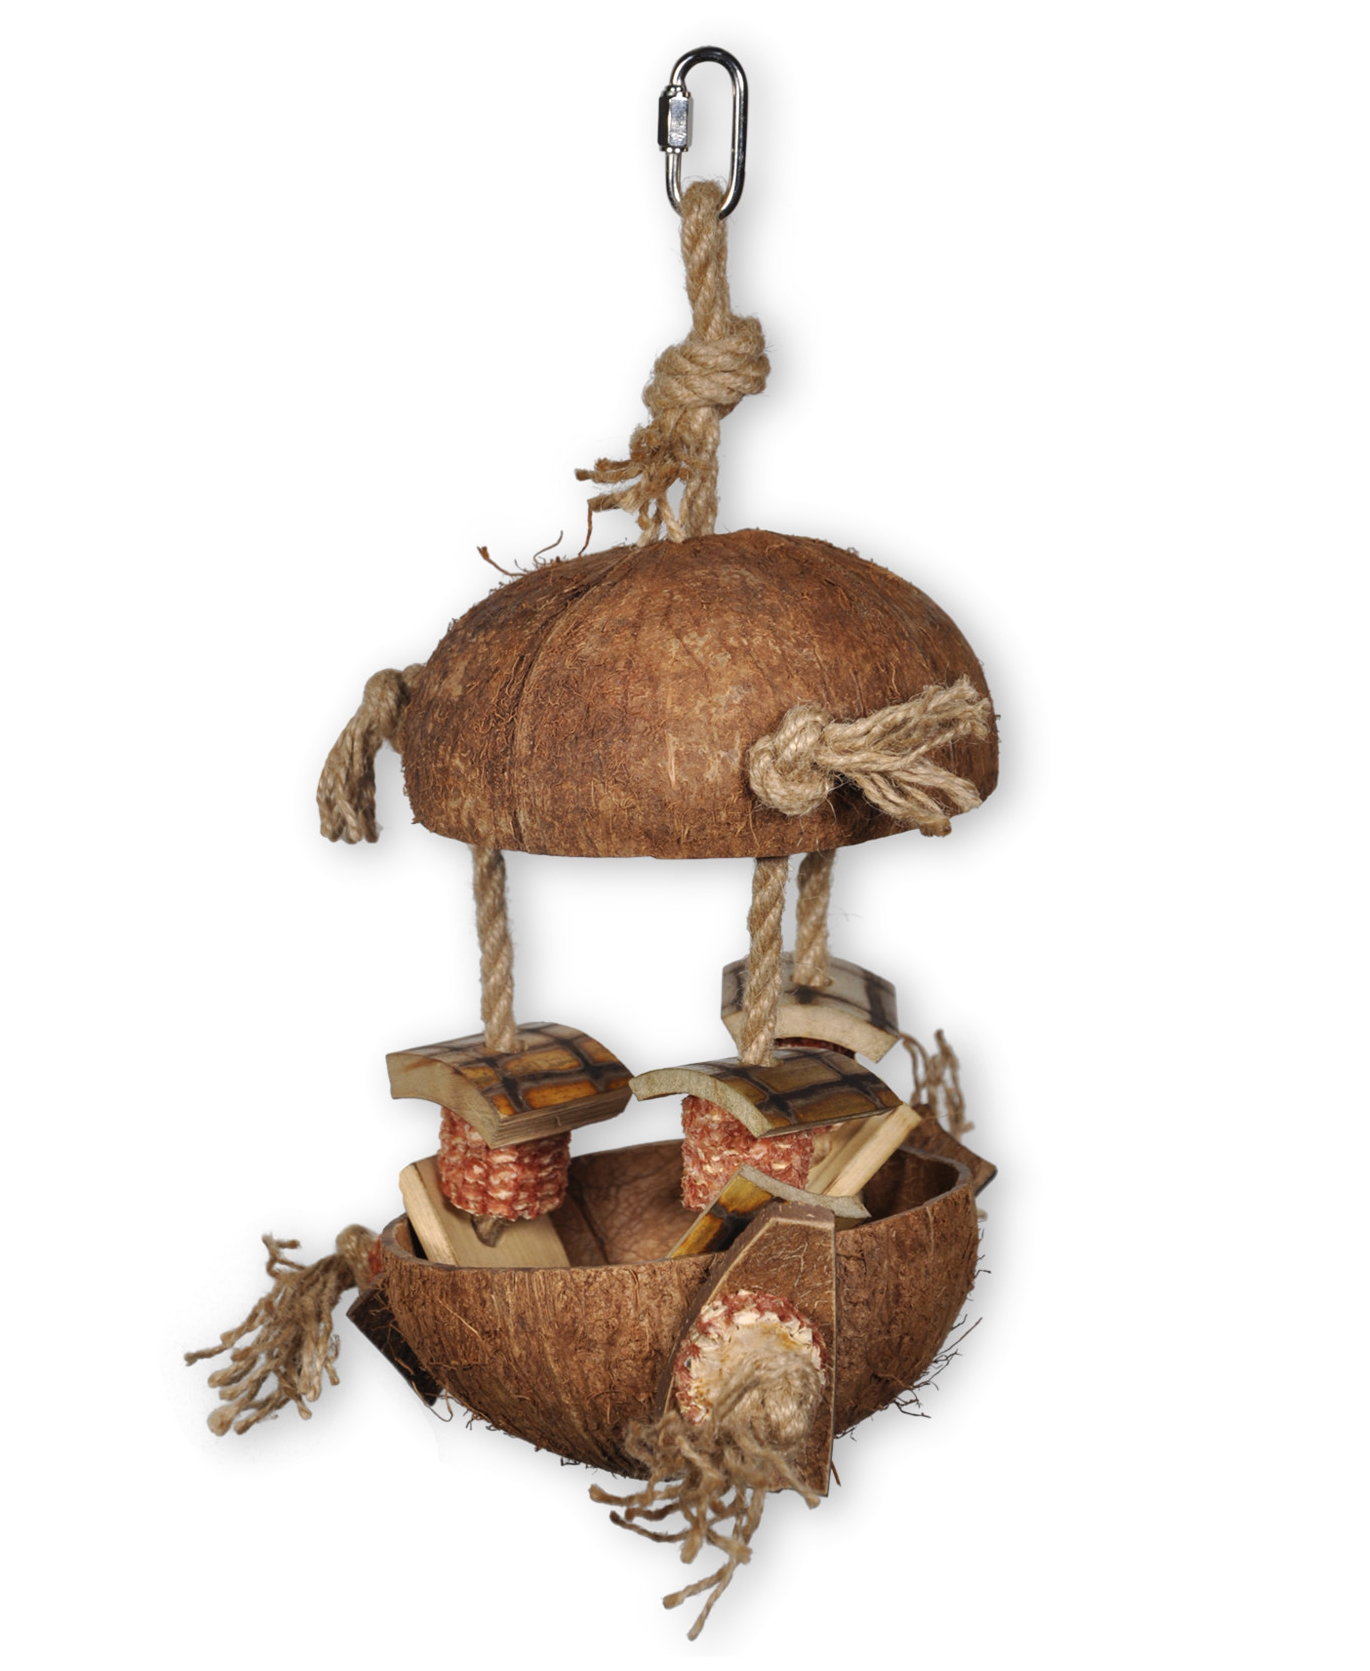 Jouet oiseau coco et bambou 36cm - Vadigran